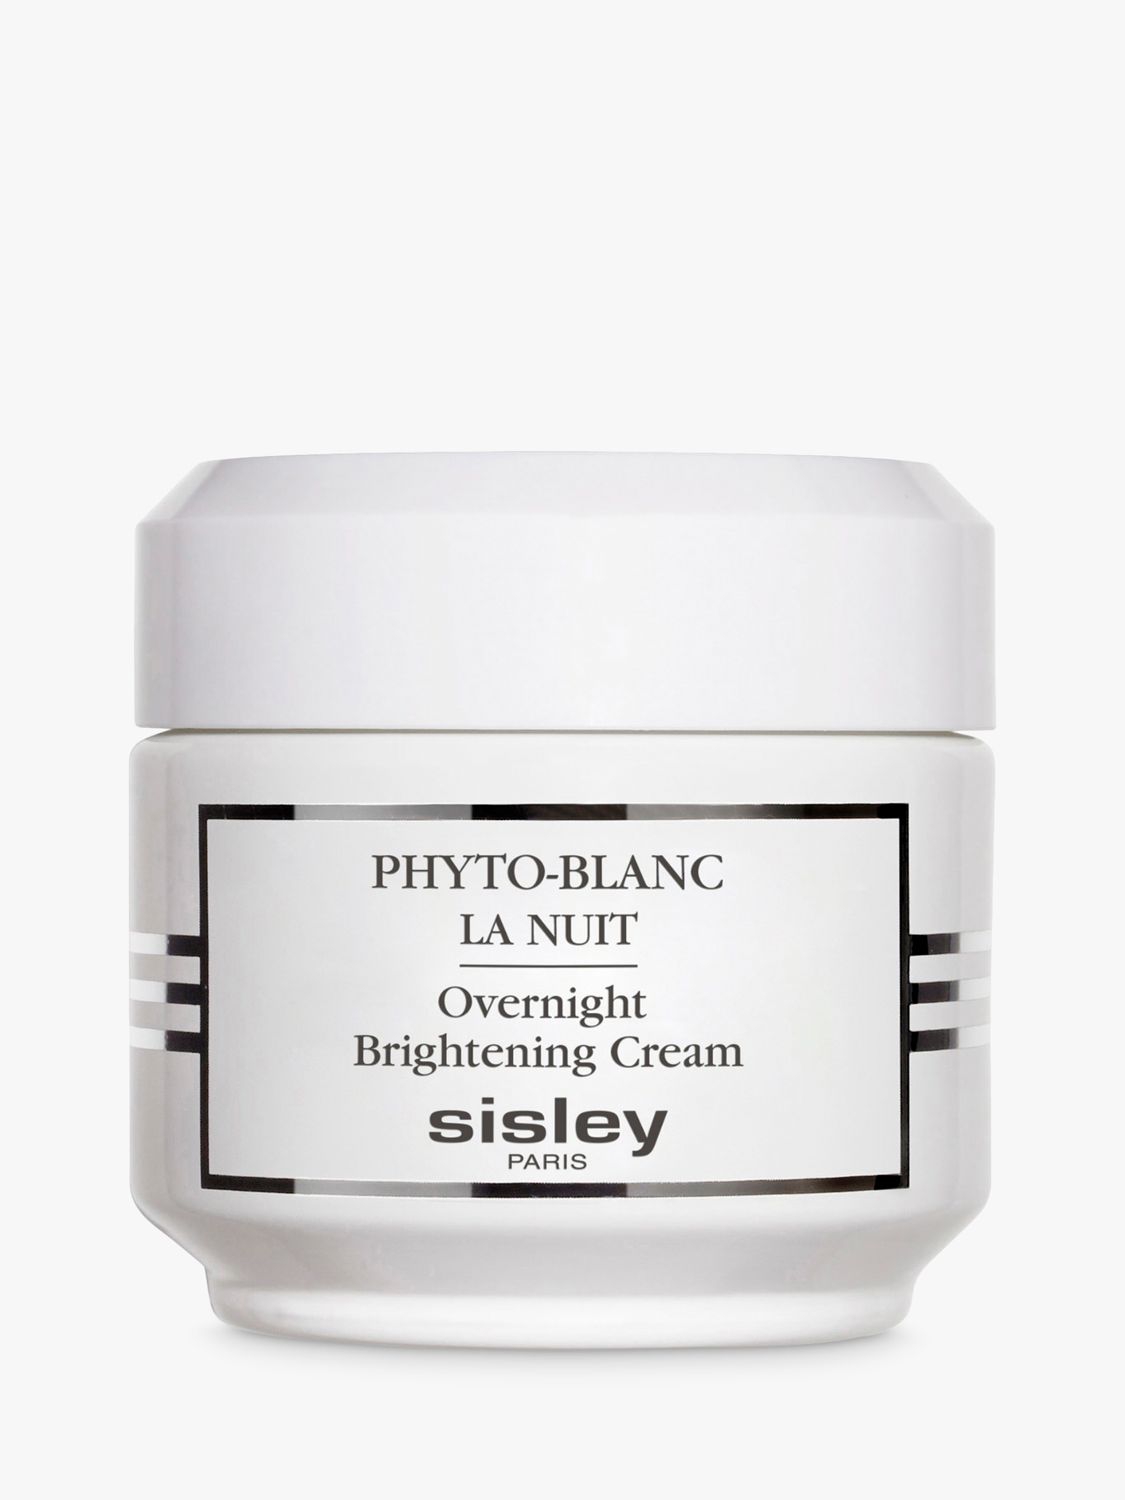 Sisley-Paris Phyto-Blanc La Nuit Overnight Brightening Cream, 50ml 1